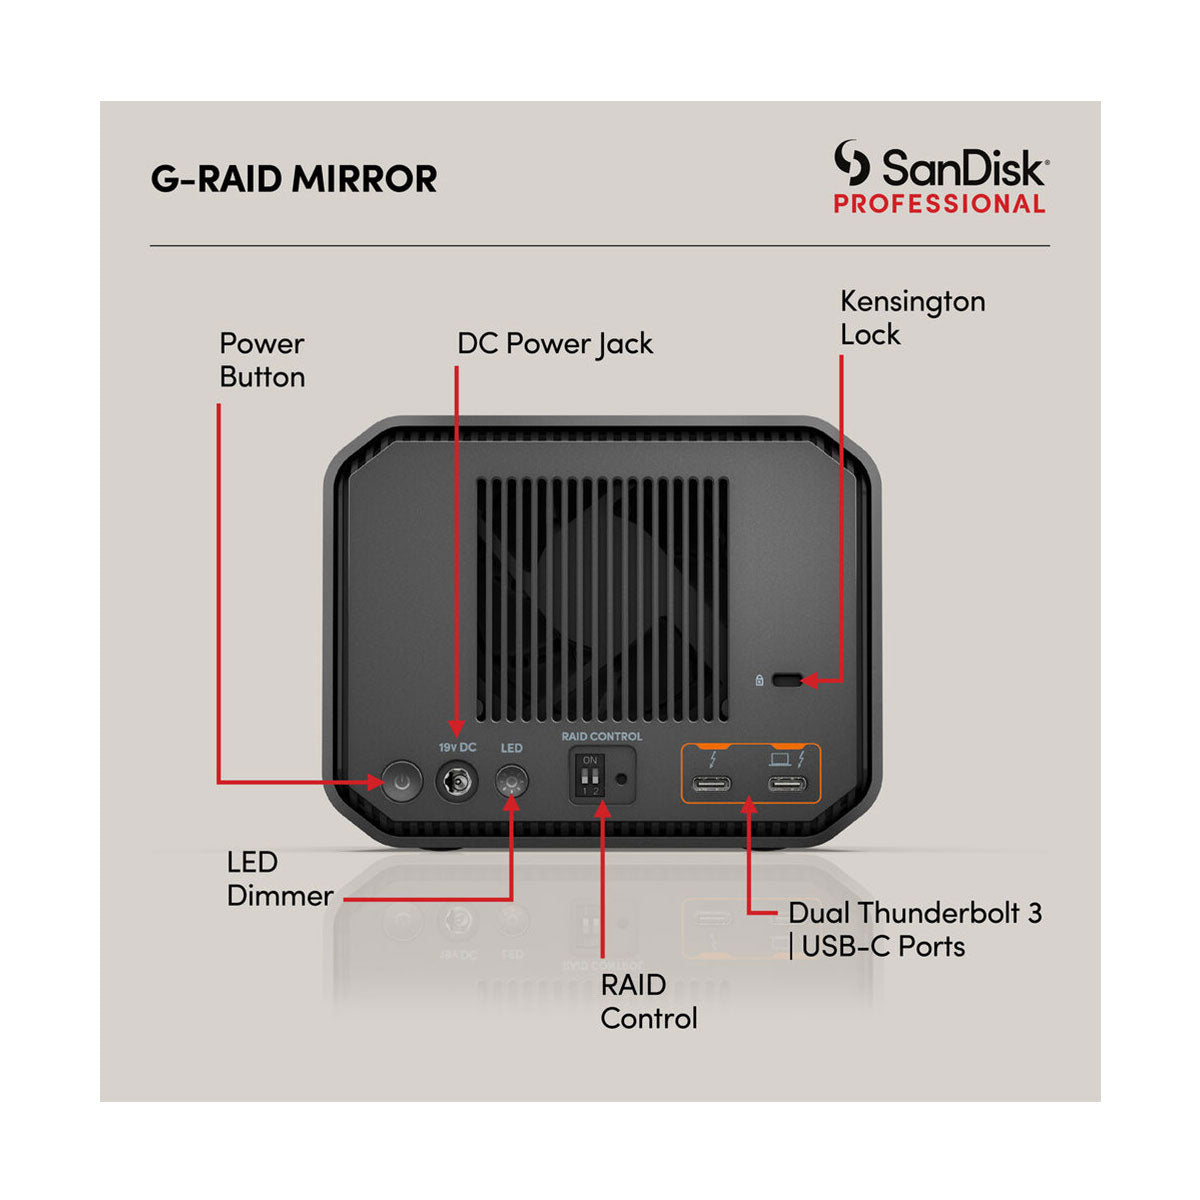 SanDisk Professional 36TB G-RAID Mirror 2-Bay RAID